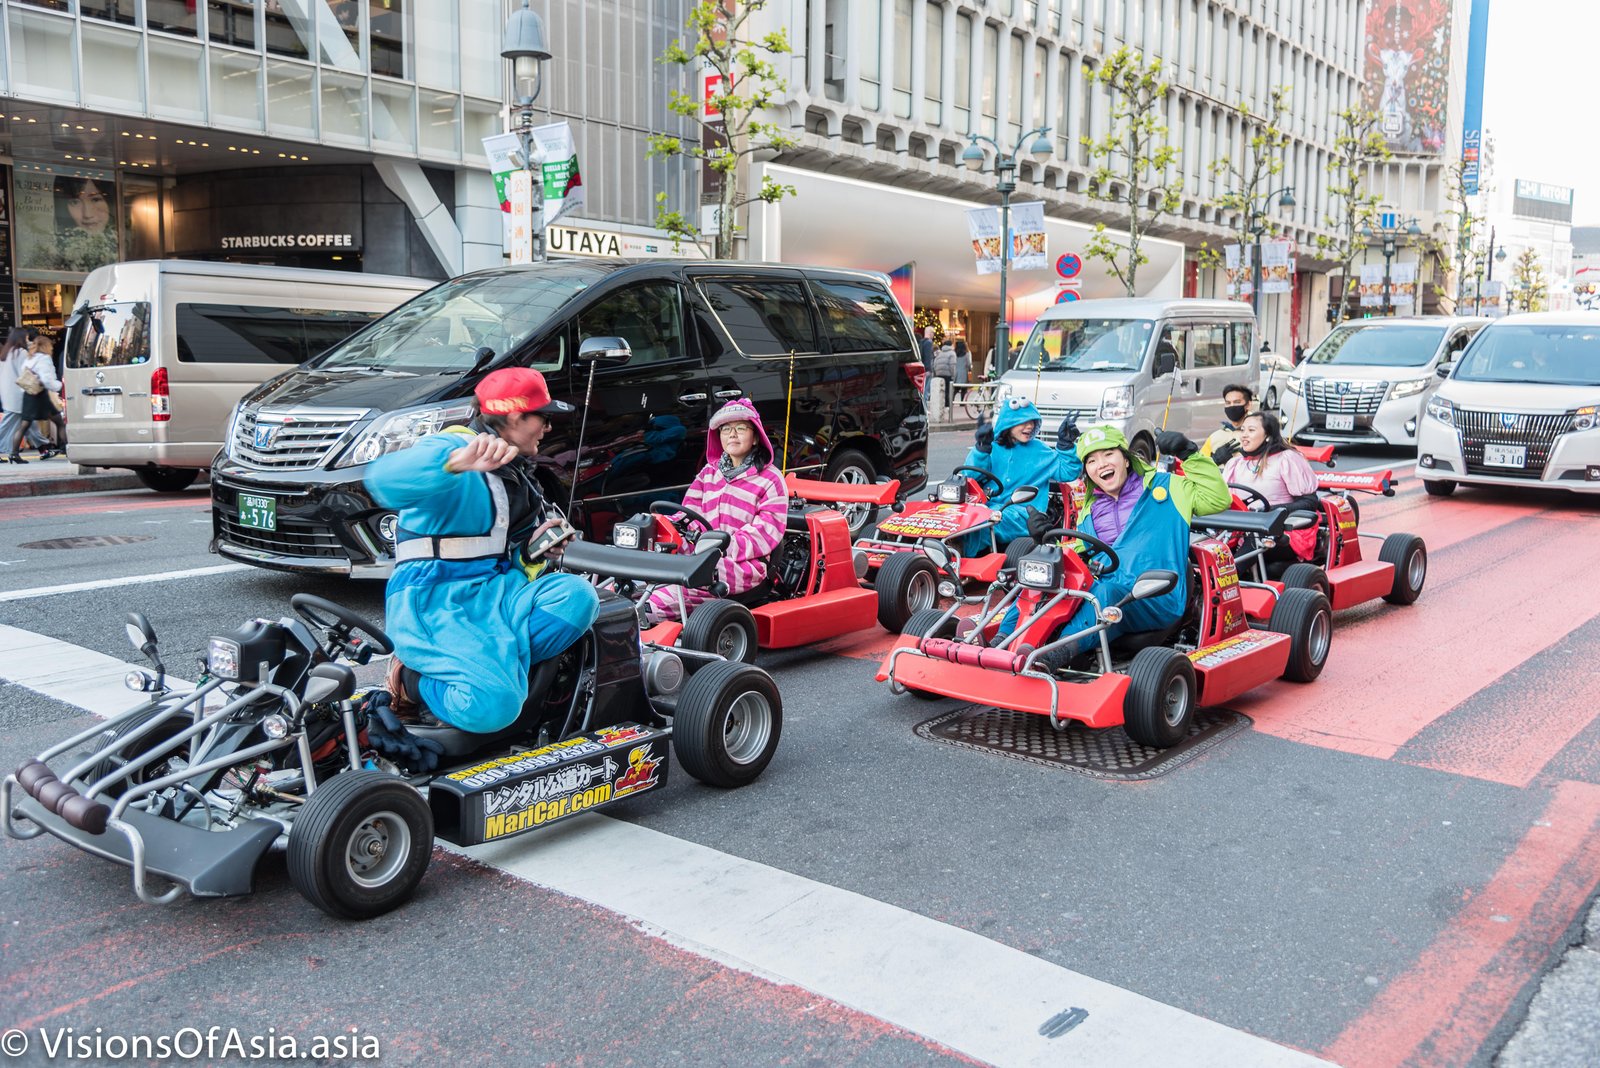 Mario Kart in Shibuya